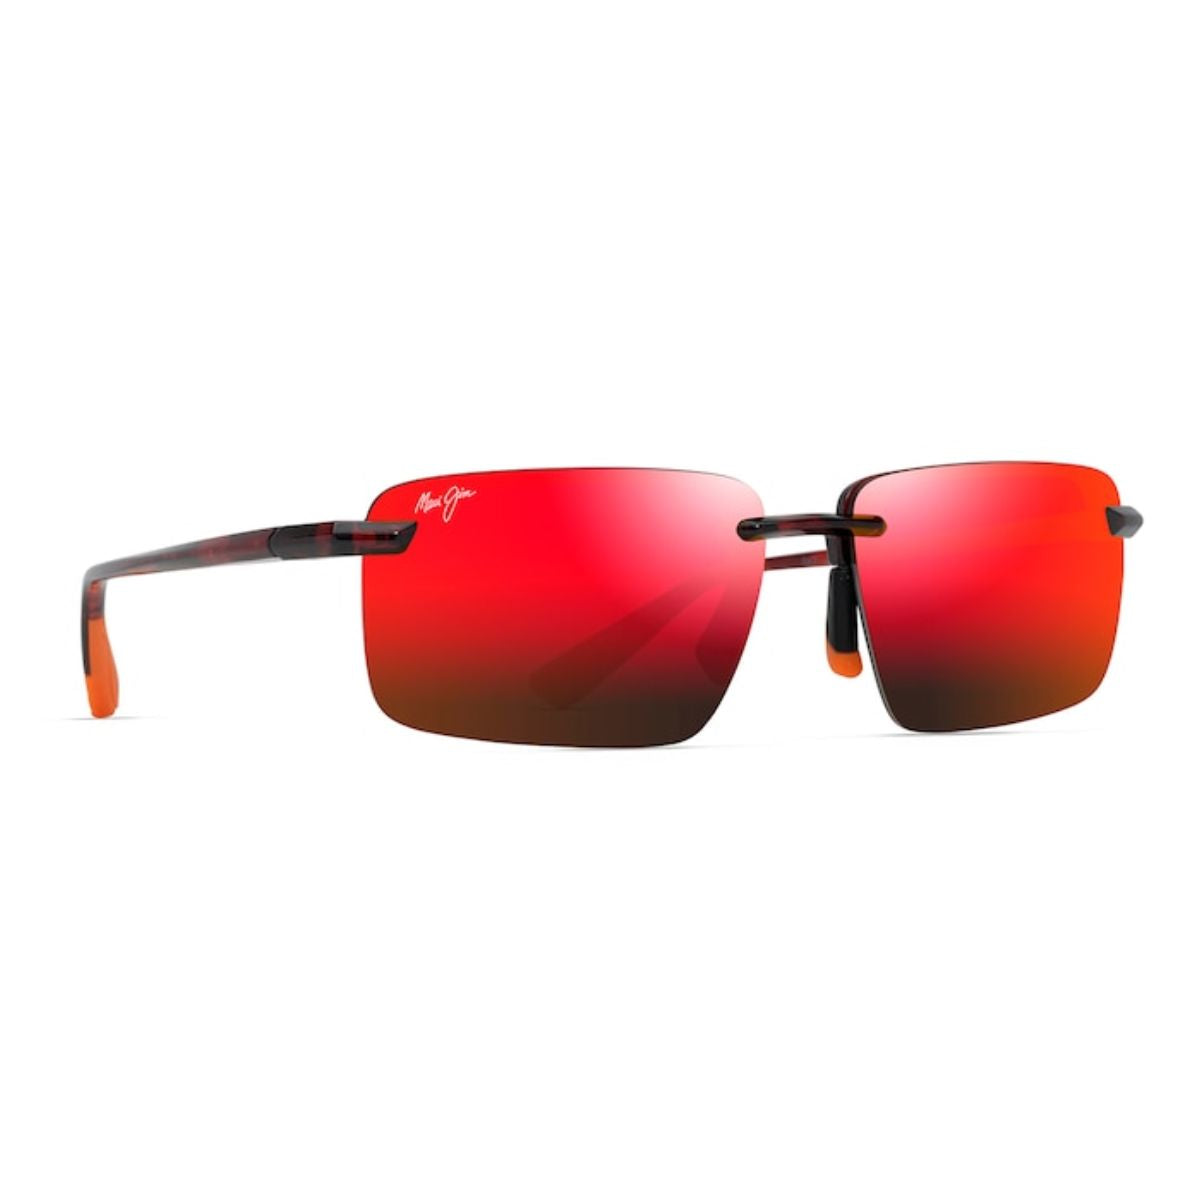 "Buy Trendy Laullma Maui Jim Polarized Sunglasses For Mens At Optorium"